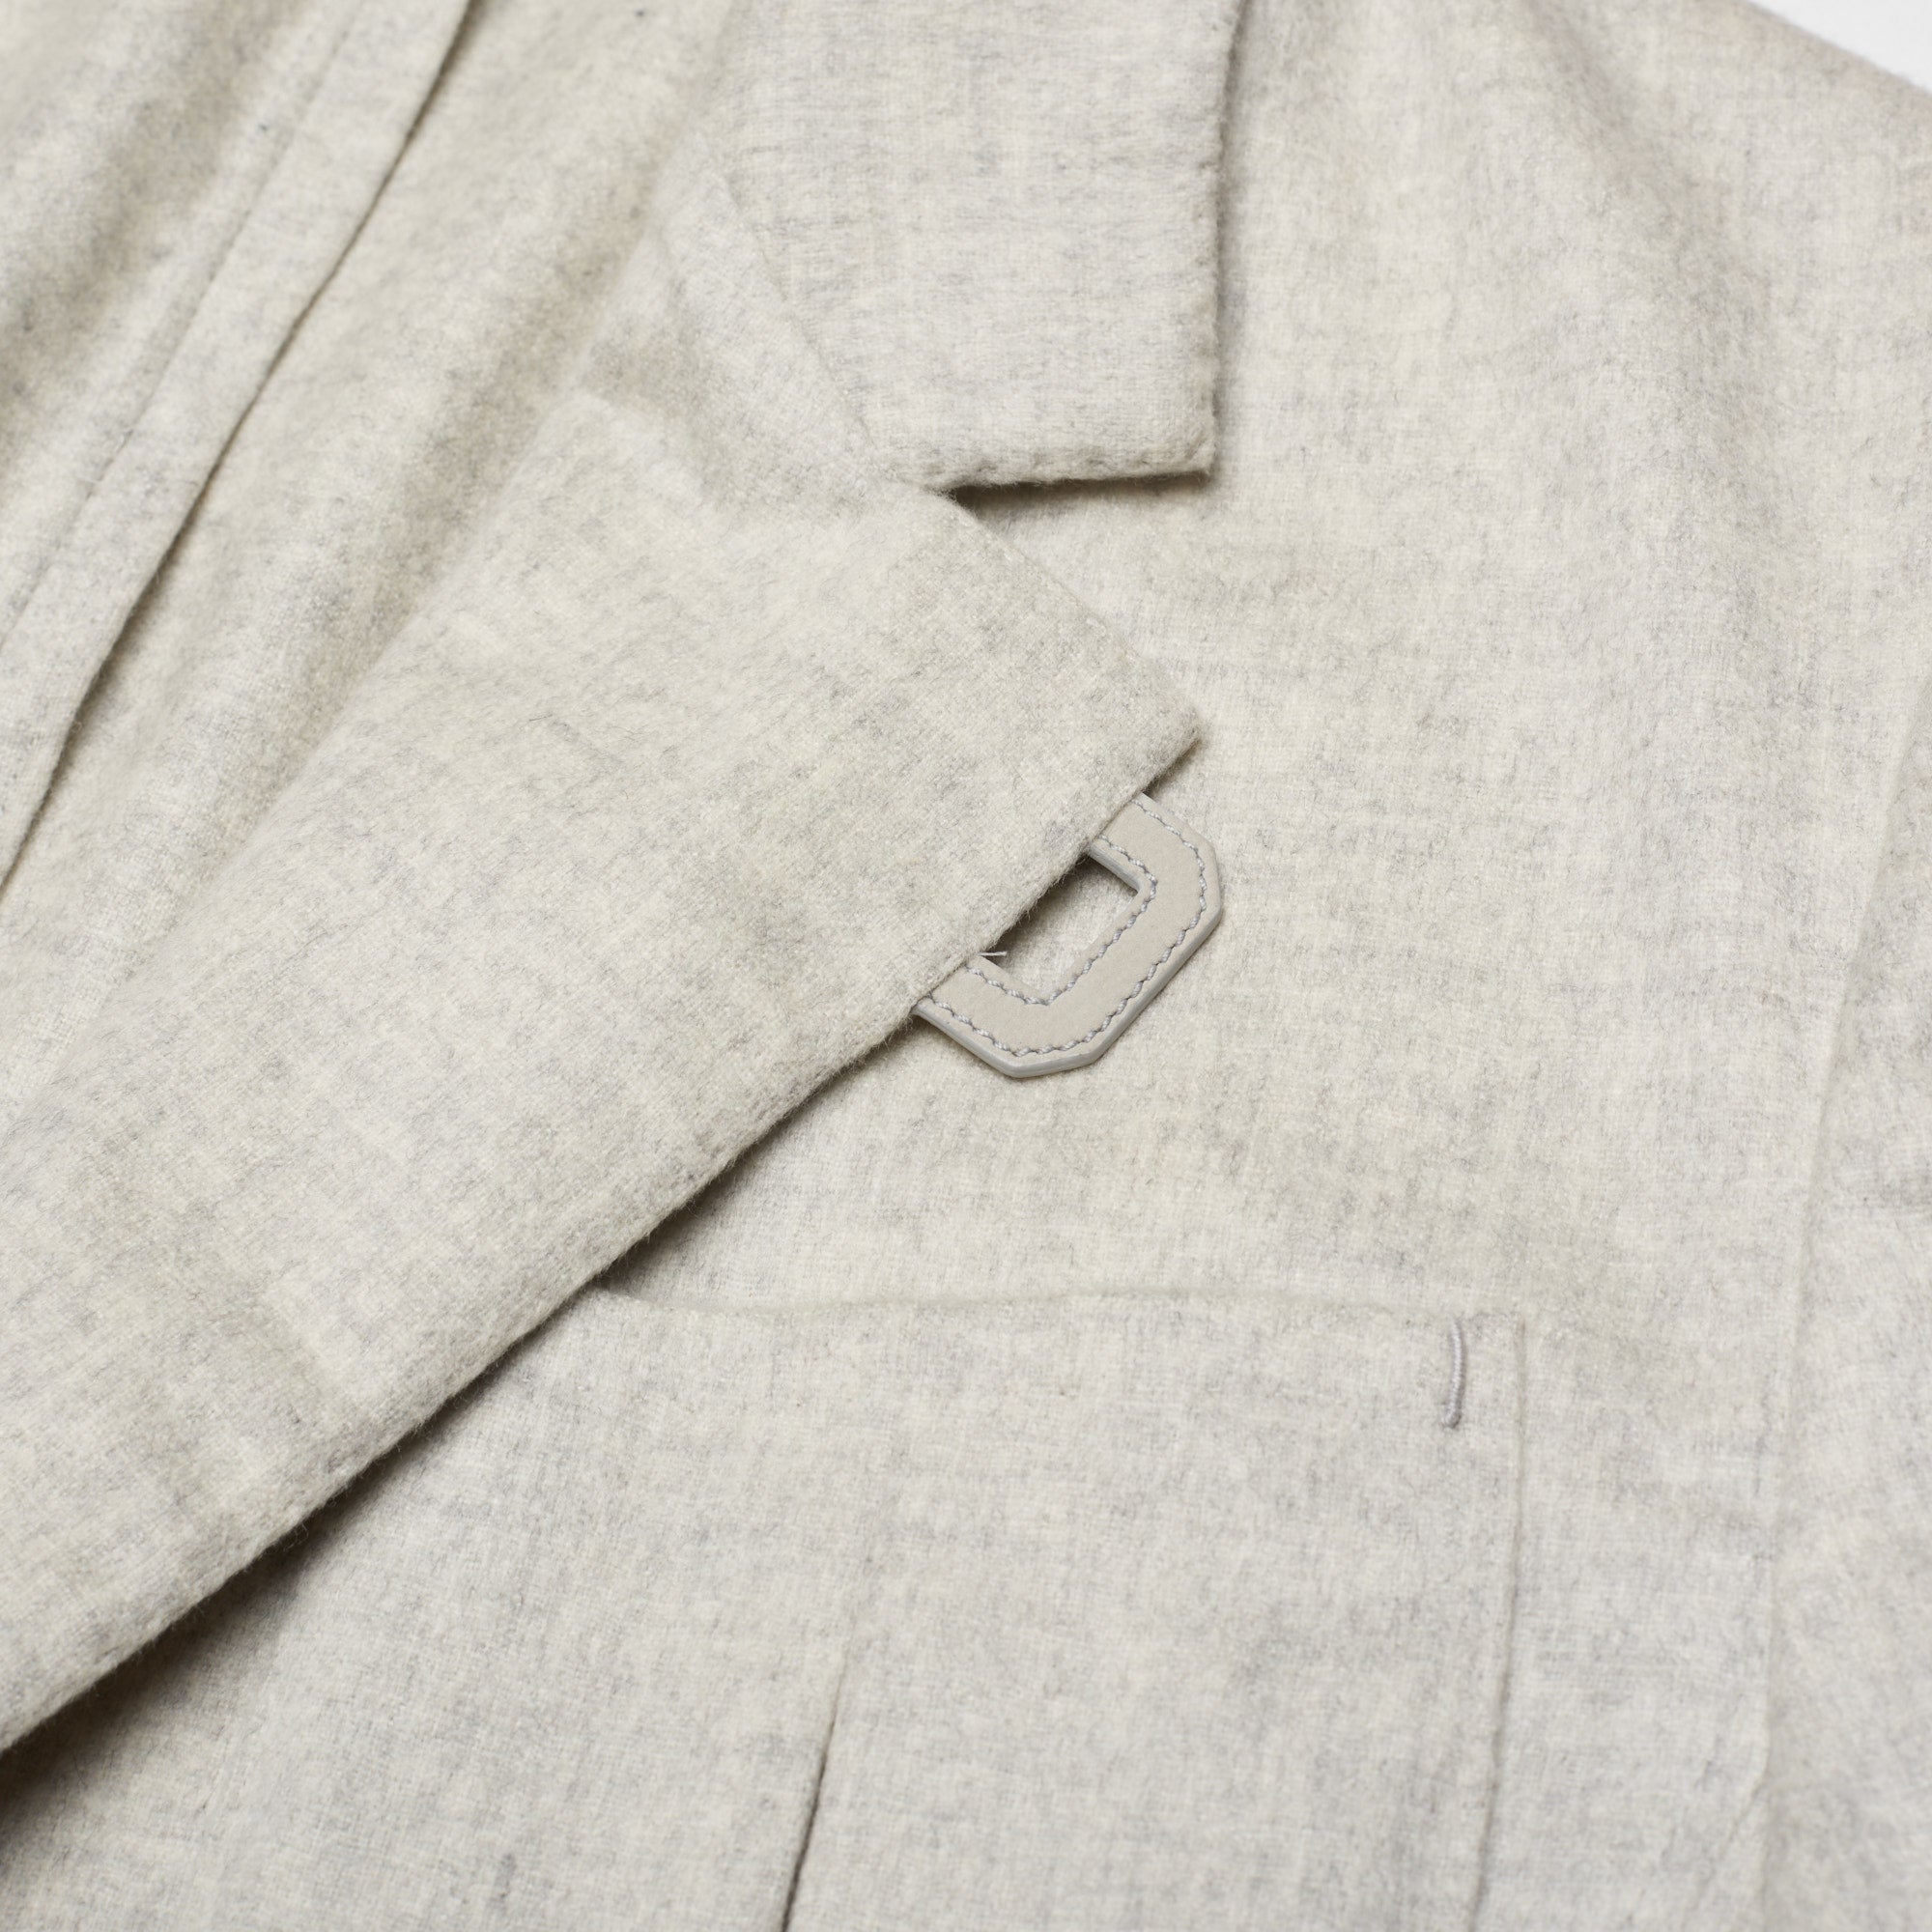 BERLUTI Paris Melange Light Gray Cashmere Blazer Jacket Size R50 US 40 BERLUTI